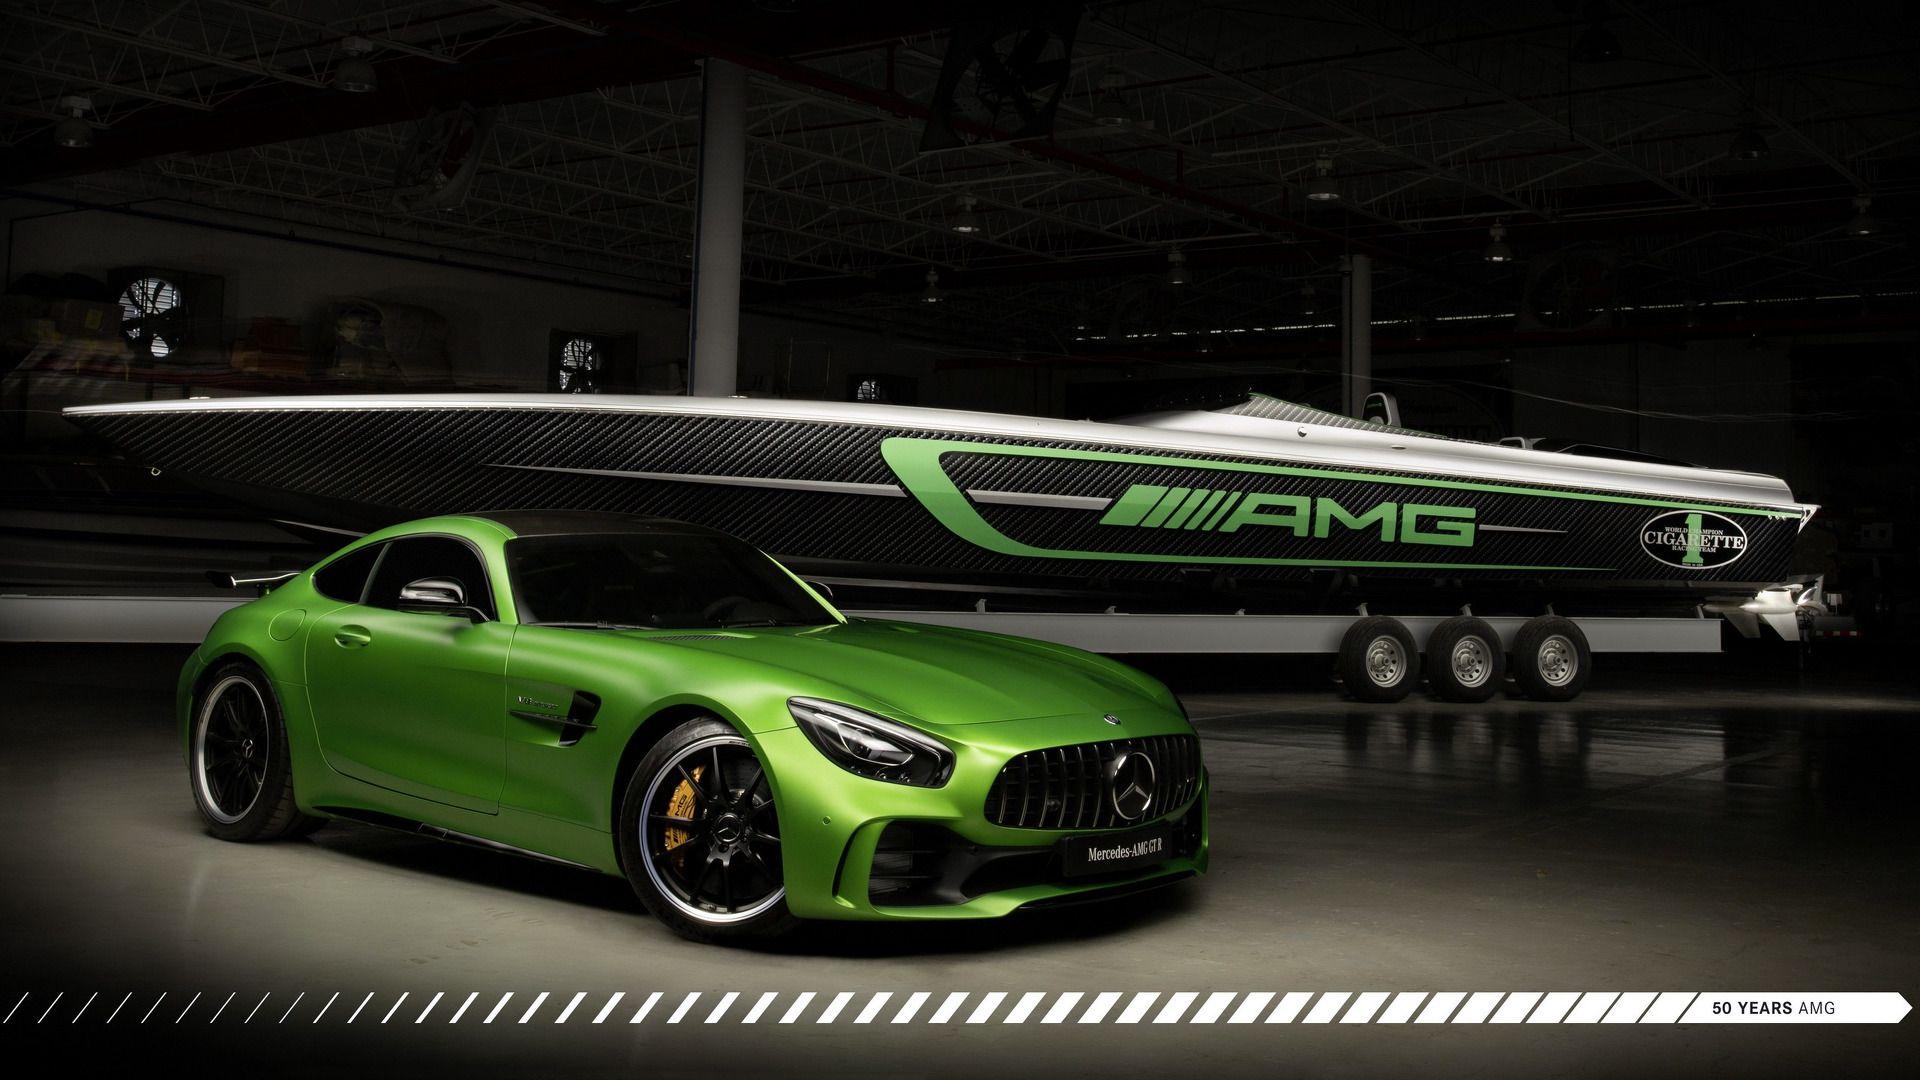 Mercedes AMG GTR Logo - Mercedes-AMG GT R Cigarette Racing boat has a pleasure key fob